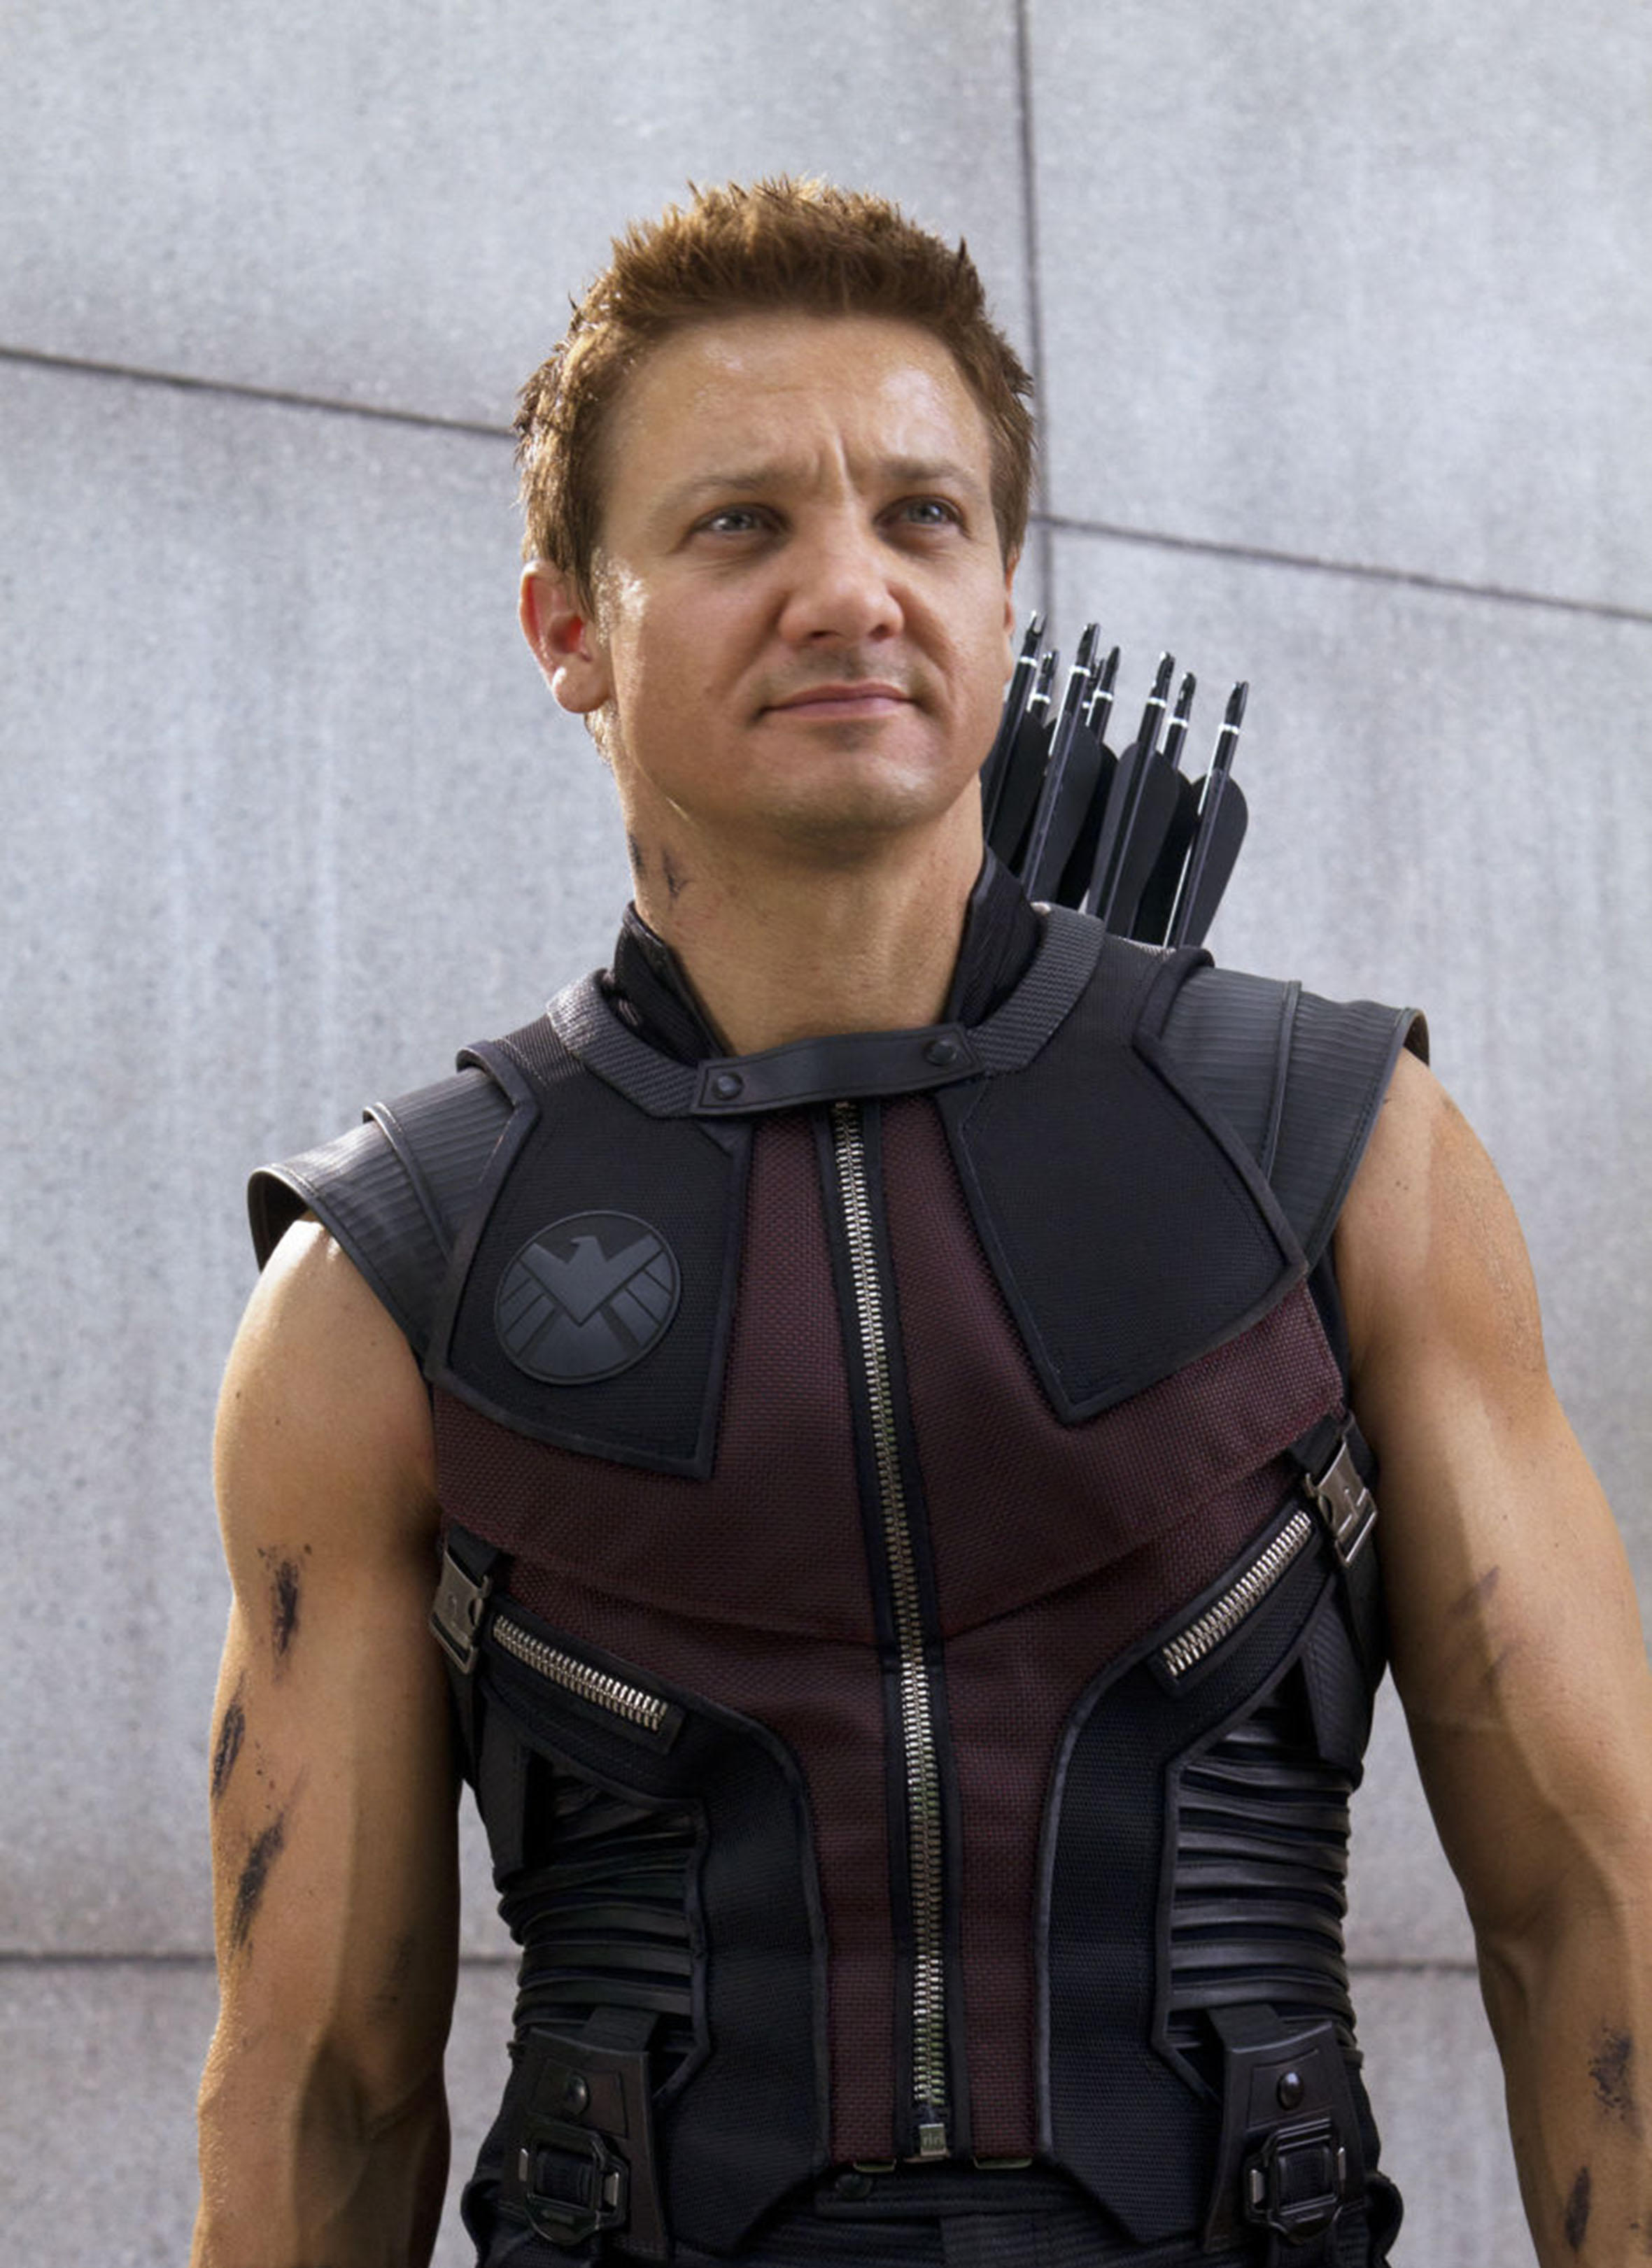 Renner was Hawkeye in the Avengers superhero movies